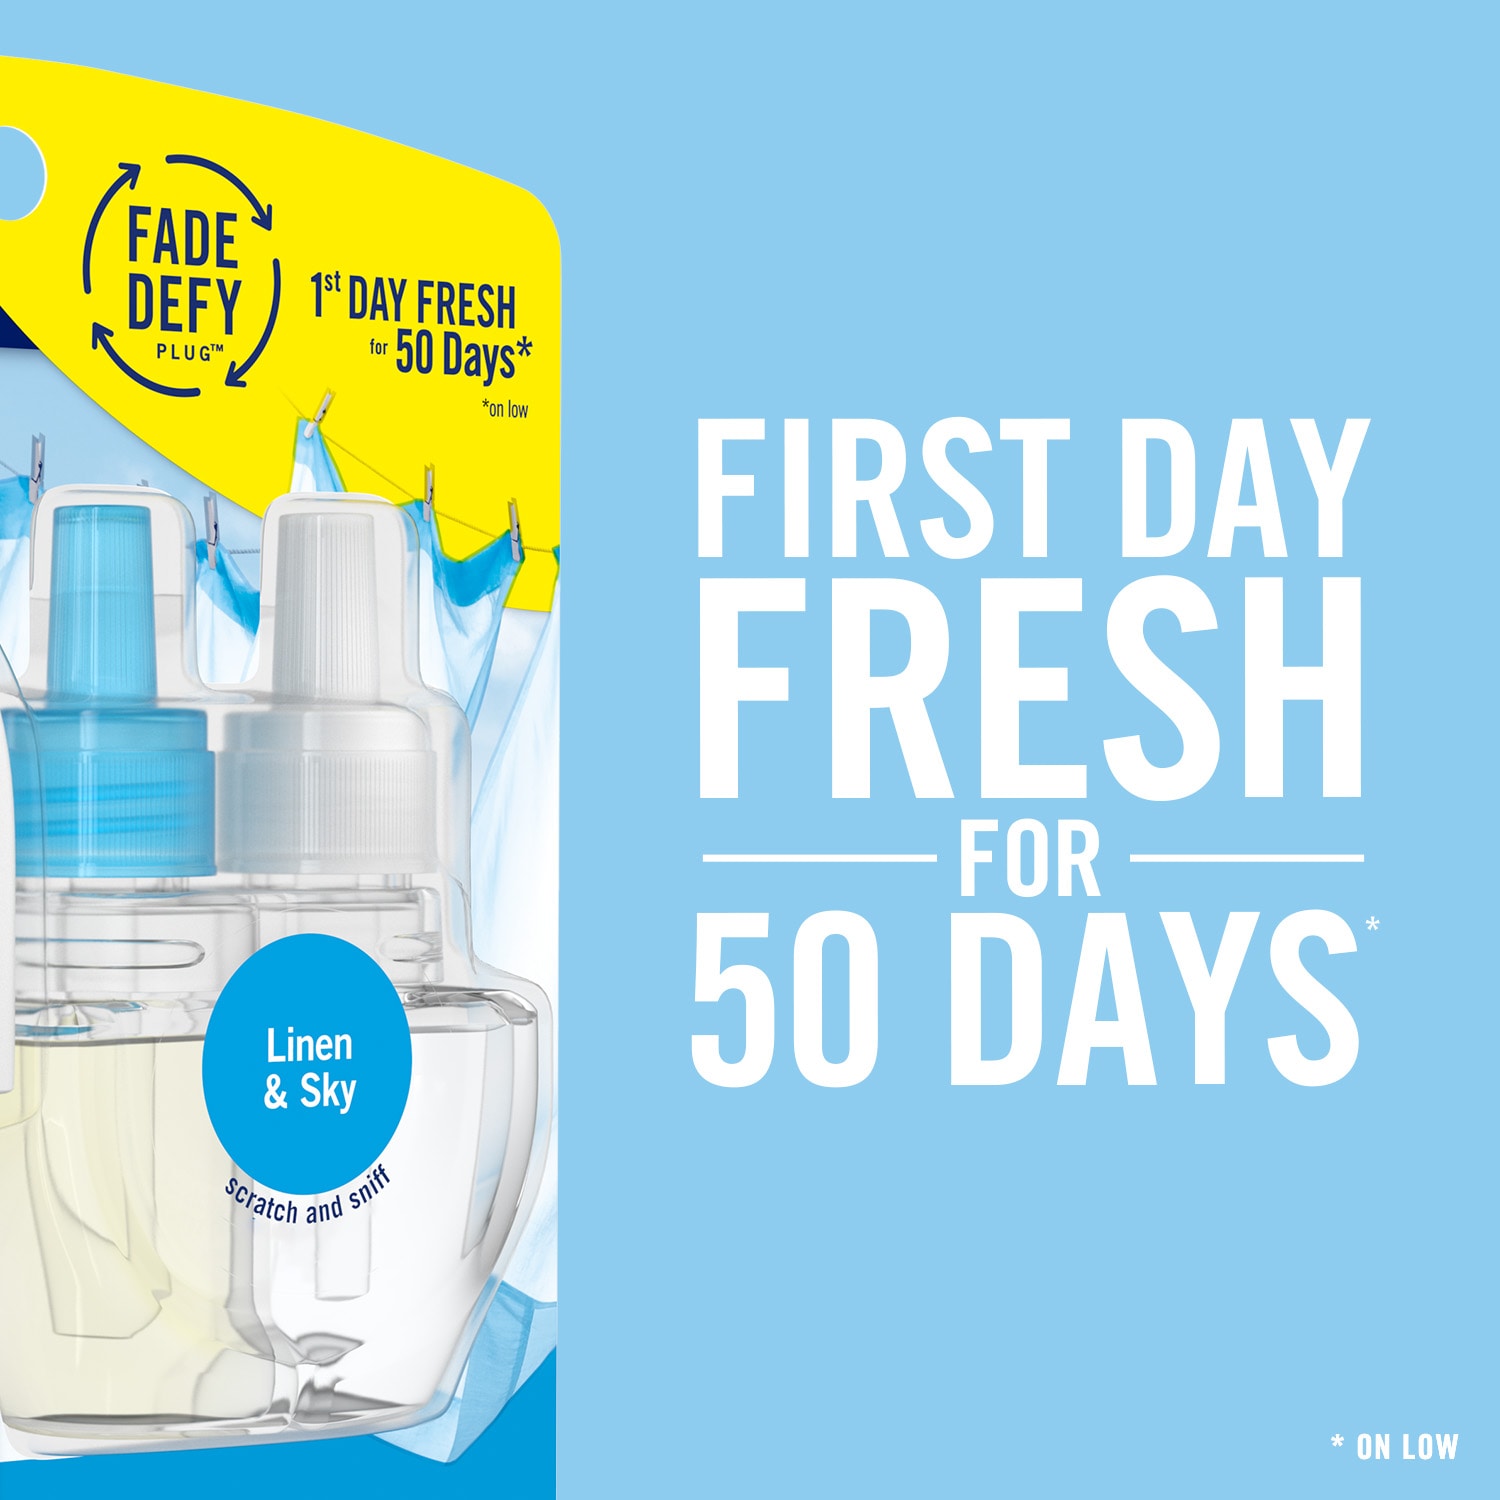 Febreze Odor-Fighting Fade Defy PLUG Air Freshener Refill, Linen & Sky, (2)  .87 fl. oz. Oil Refills